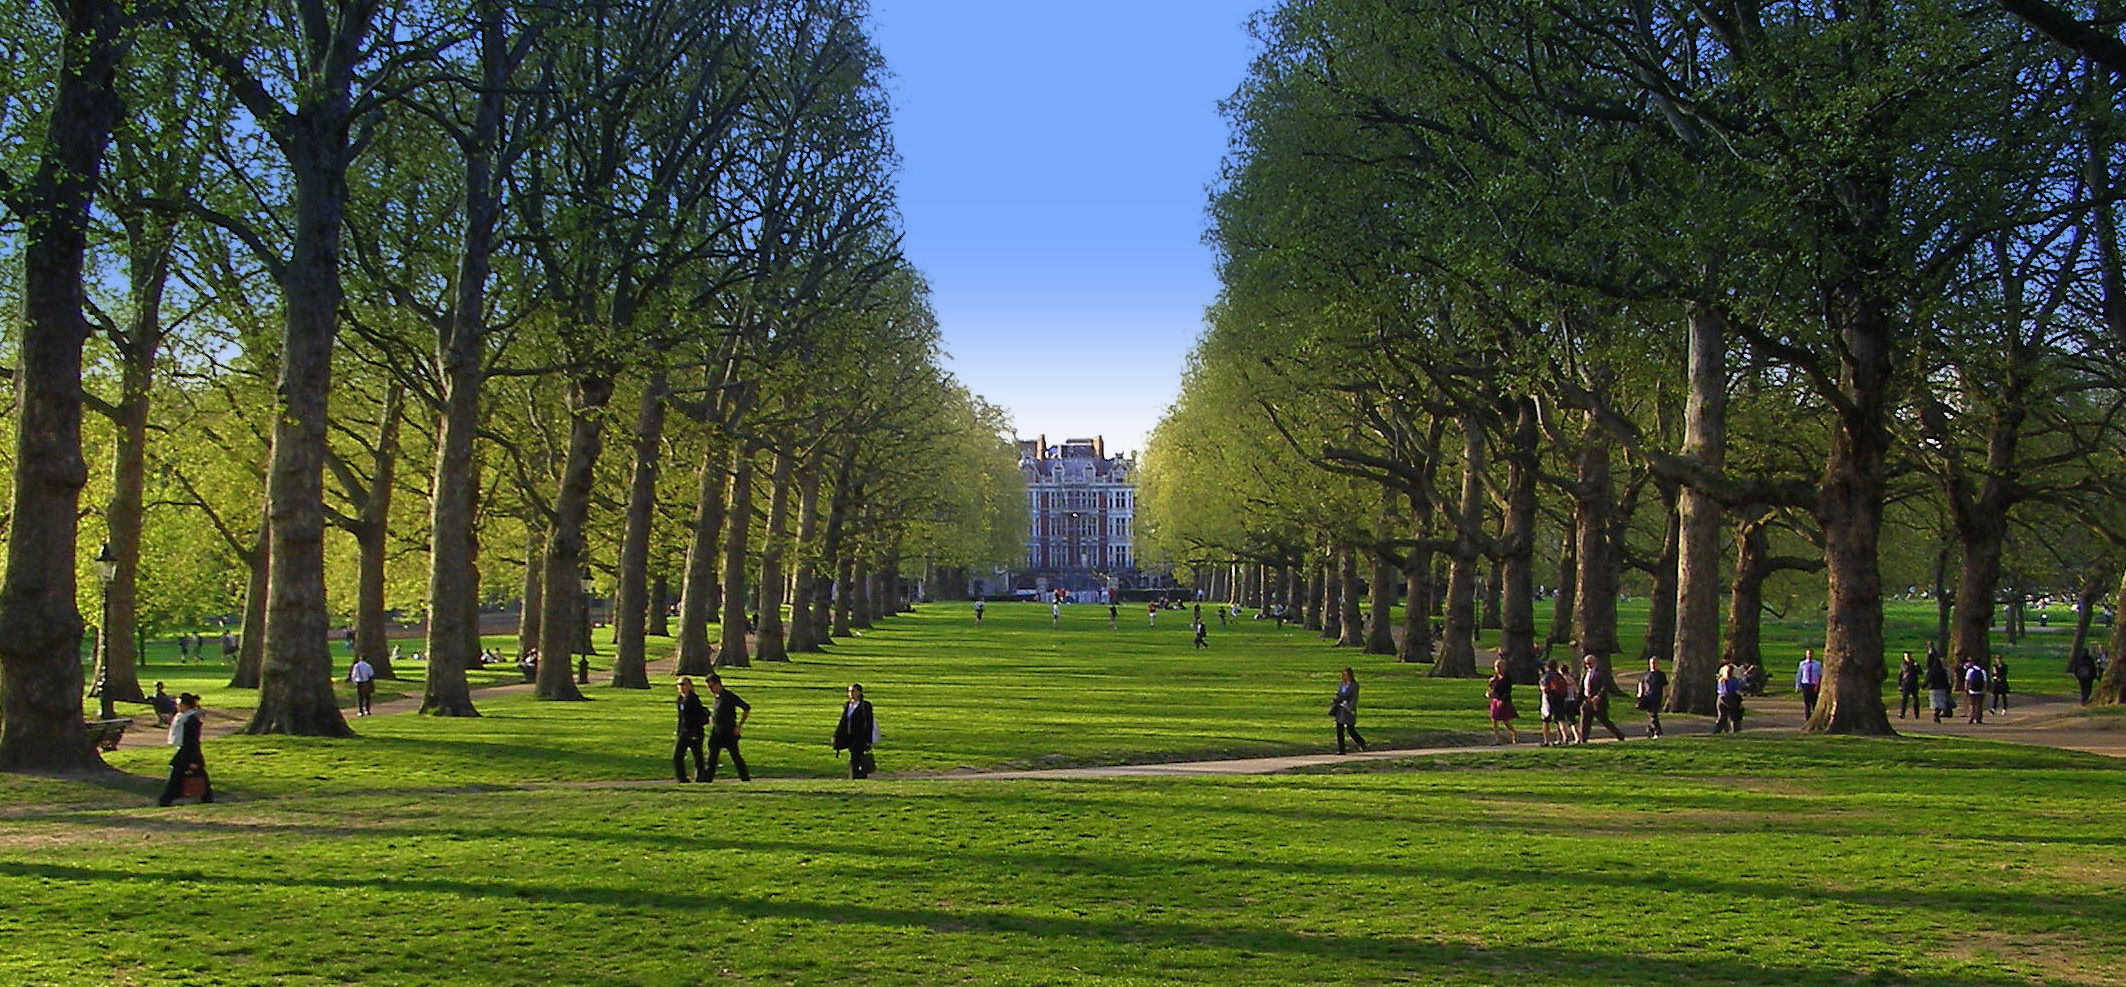 Зеленый лондон. Грин парк Лондон. Hyde Park в Лондоне. Парк в Лондоне гайд парк. Гайд-парк (Hyde Park), Лондон.